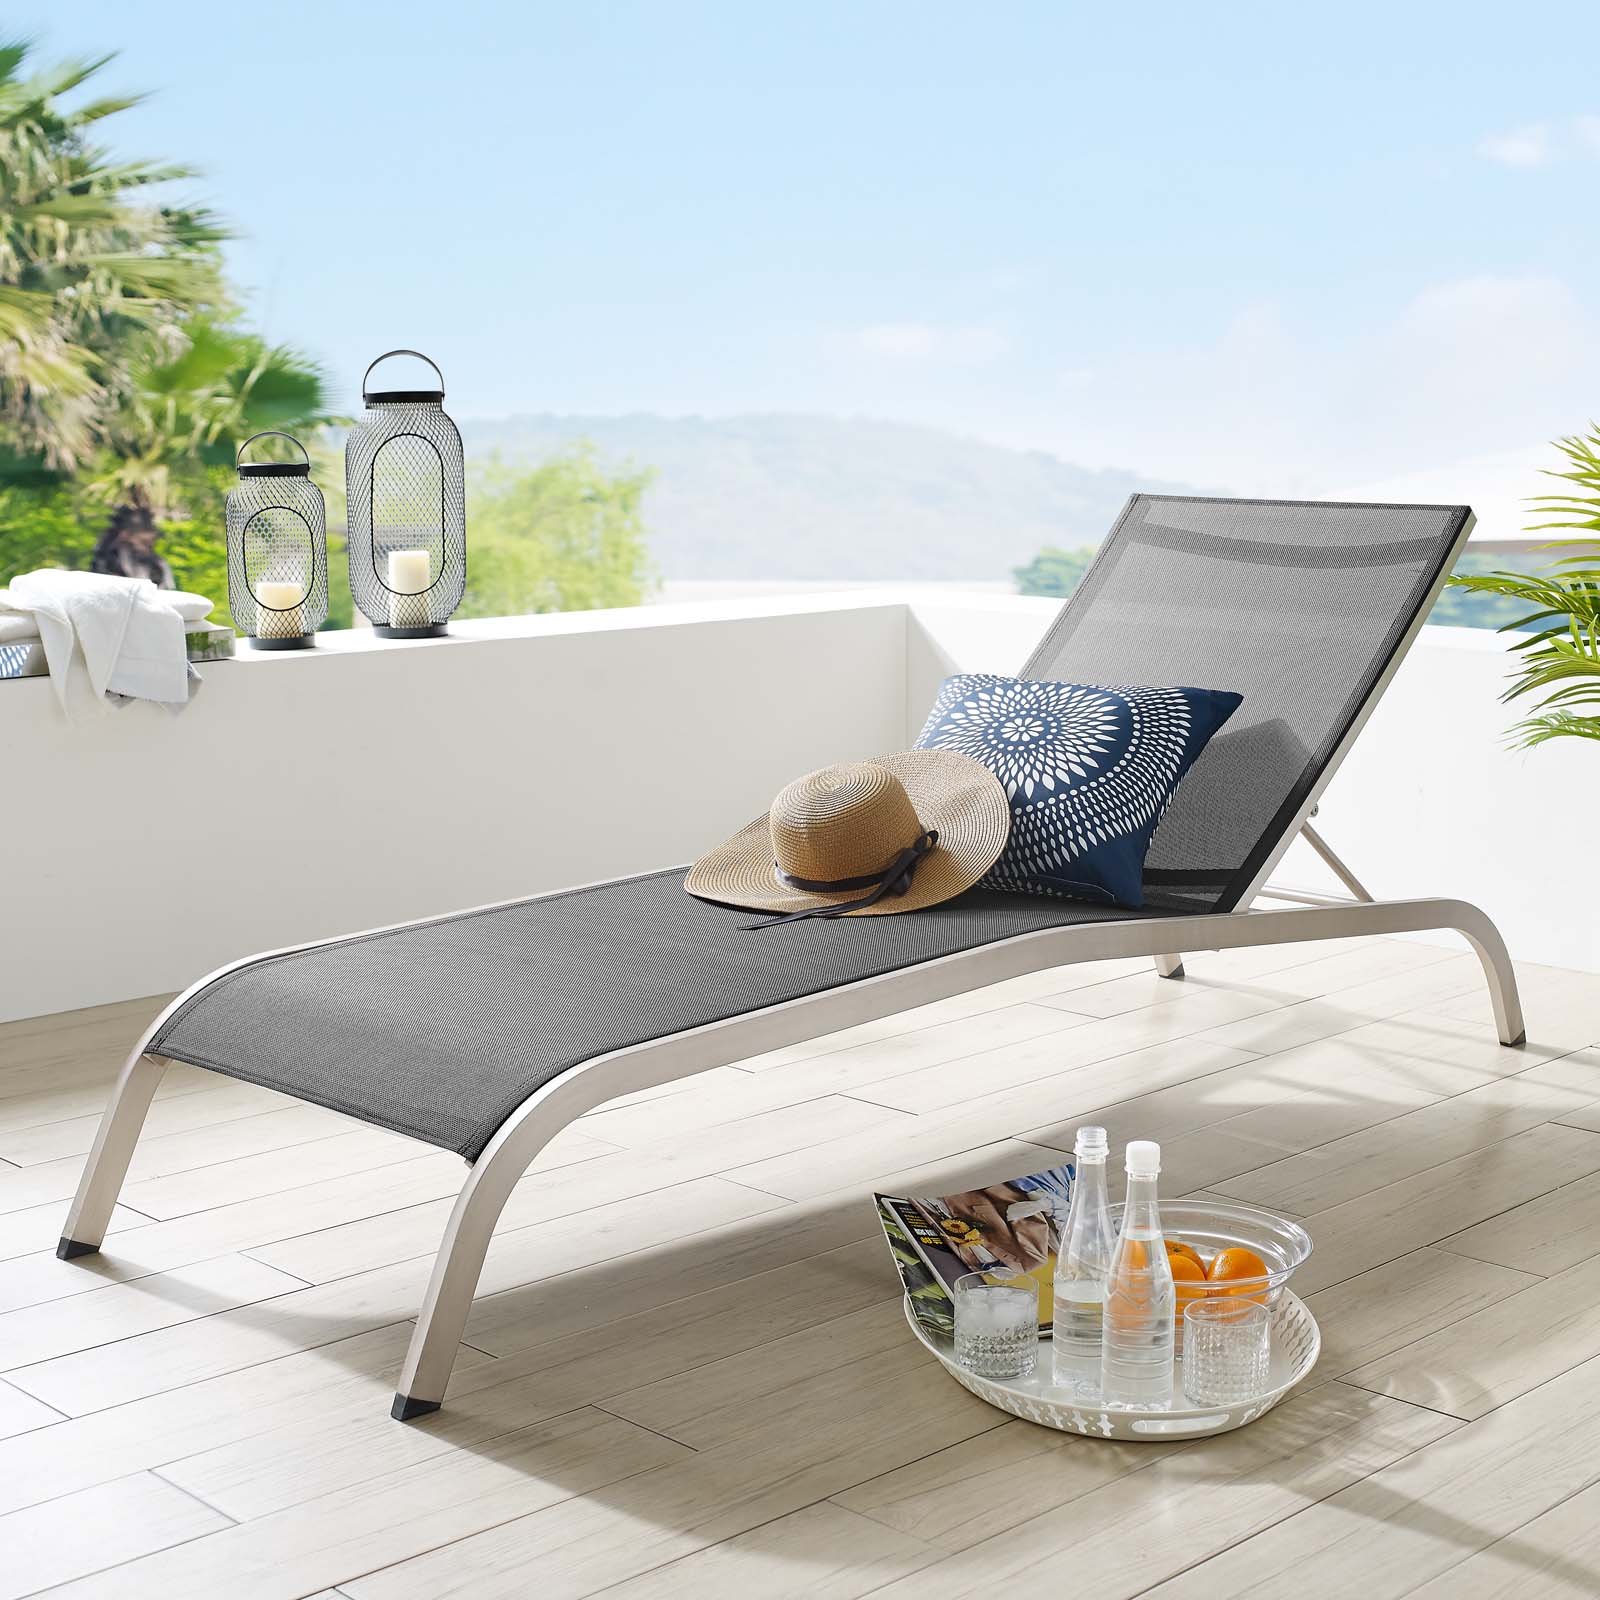 Contemporary Modern Urban Designer Outdoor Patio Balcony Garden Furniture Lounge Lounge Chair, Aluminum, Black - image 2 of 6